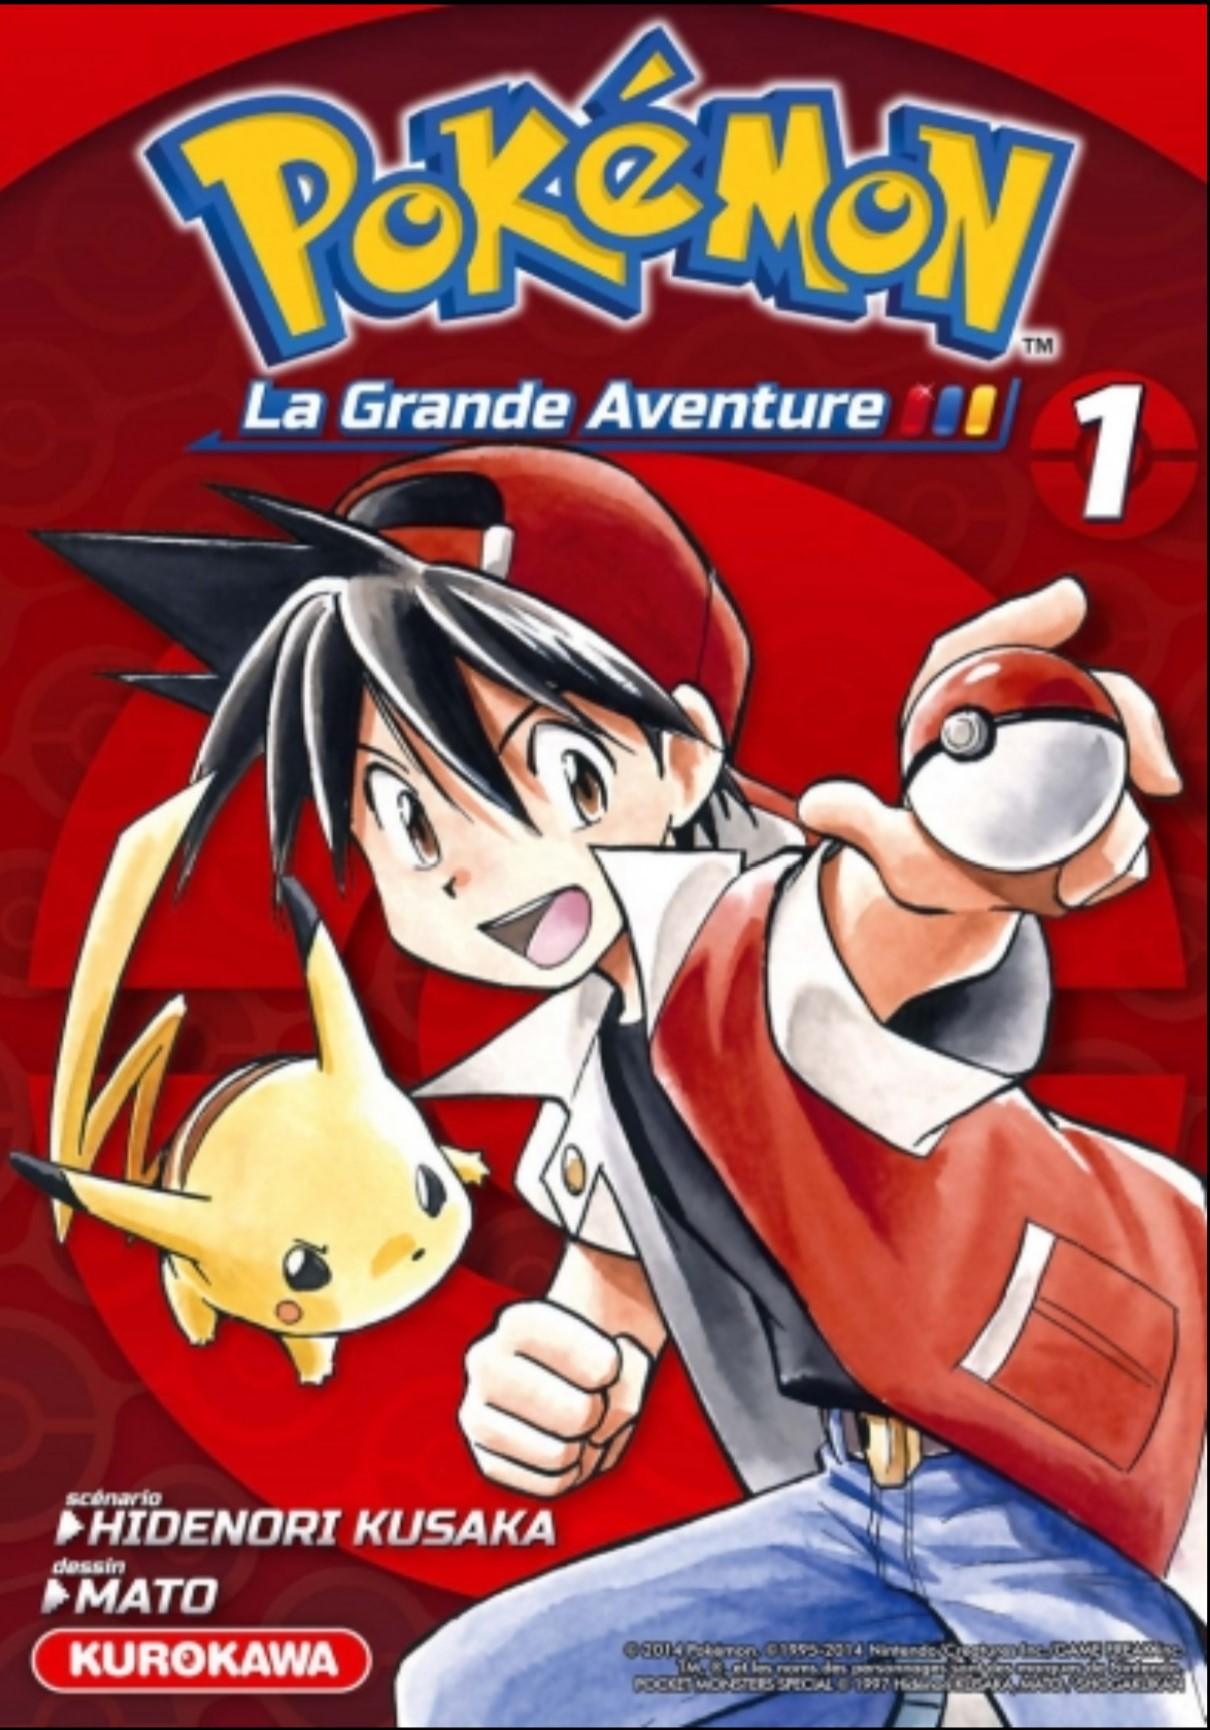 La couverture du tome 1 du manga "Pokémon, la grande aventure". [MATO, Hidenori KUSAKA/Kurokawa]